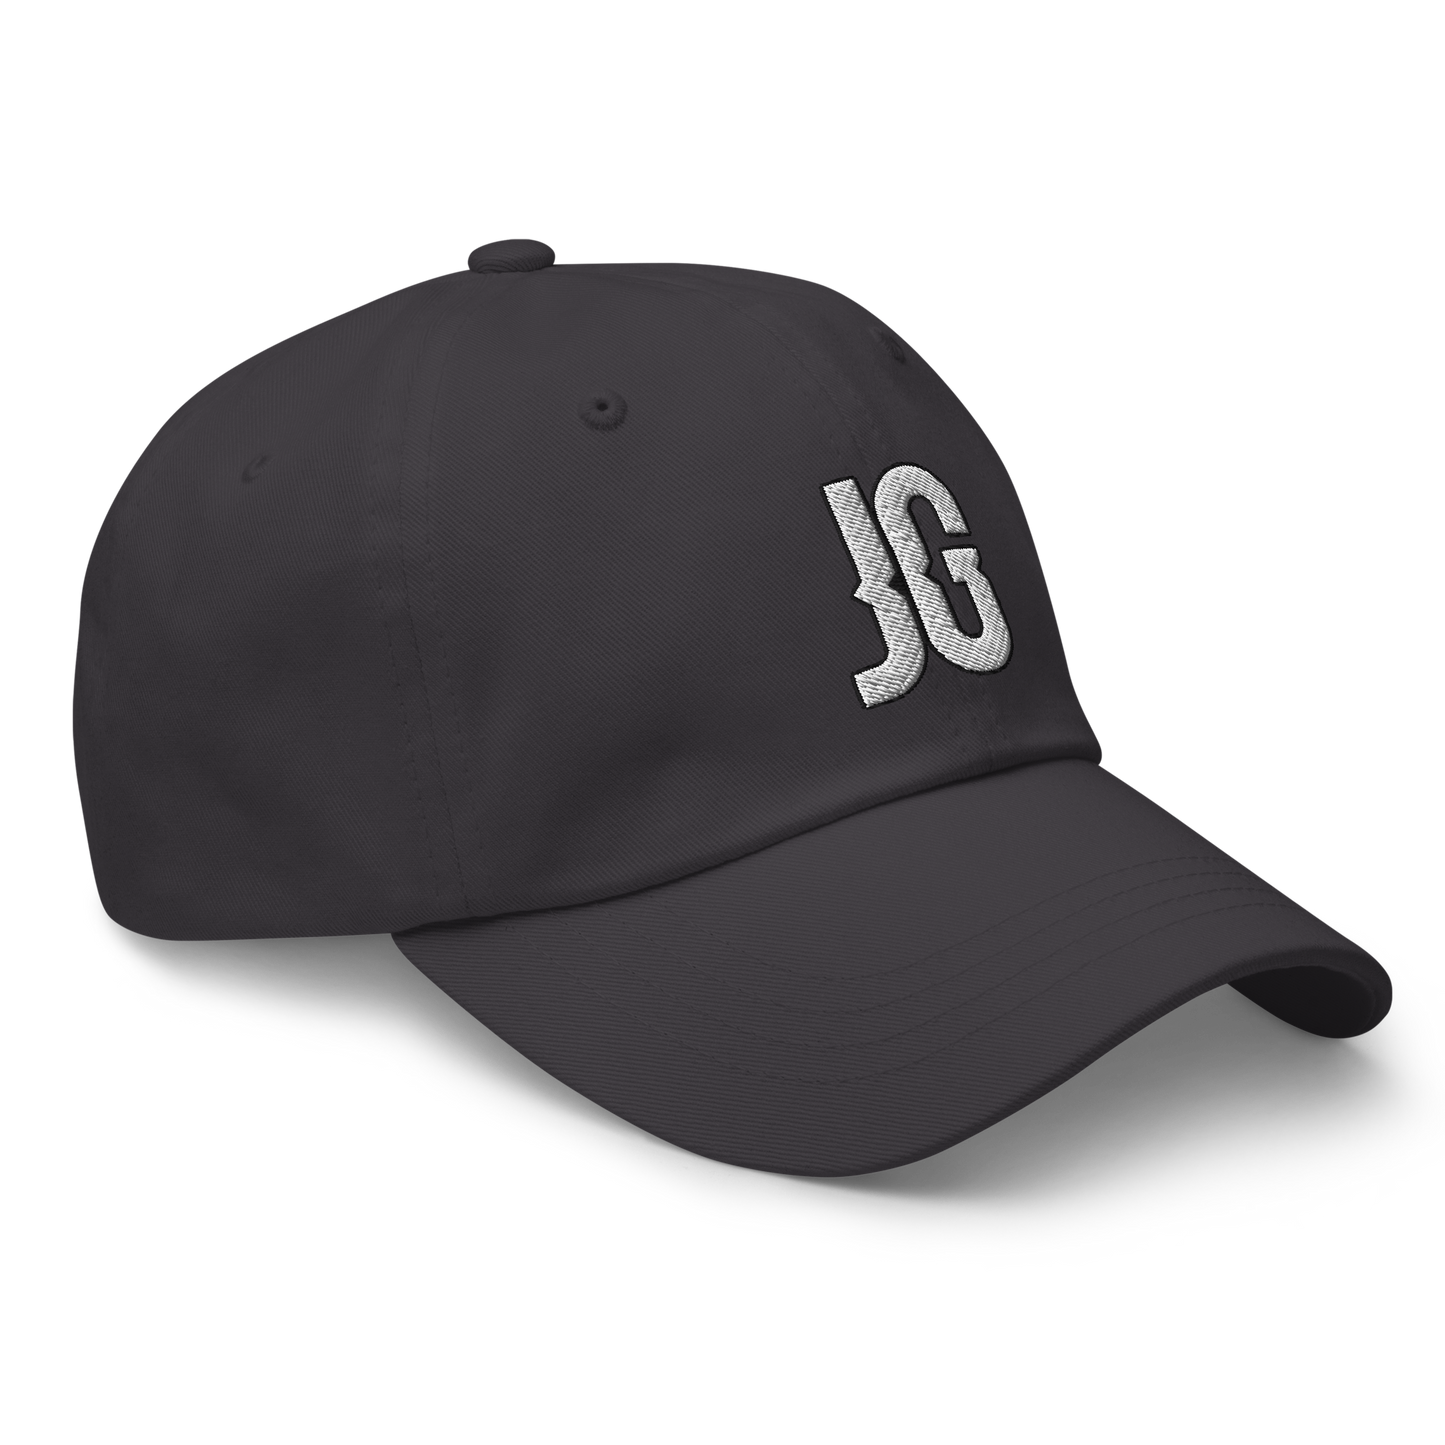 JAIVION PERFORMANCE CAP